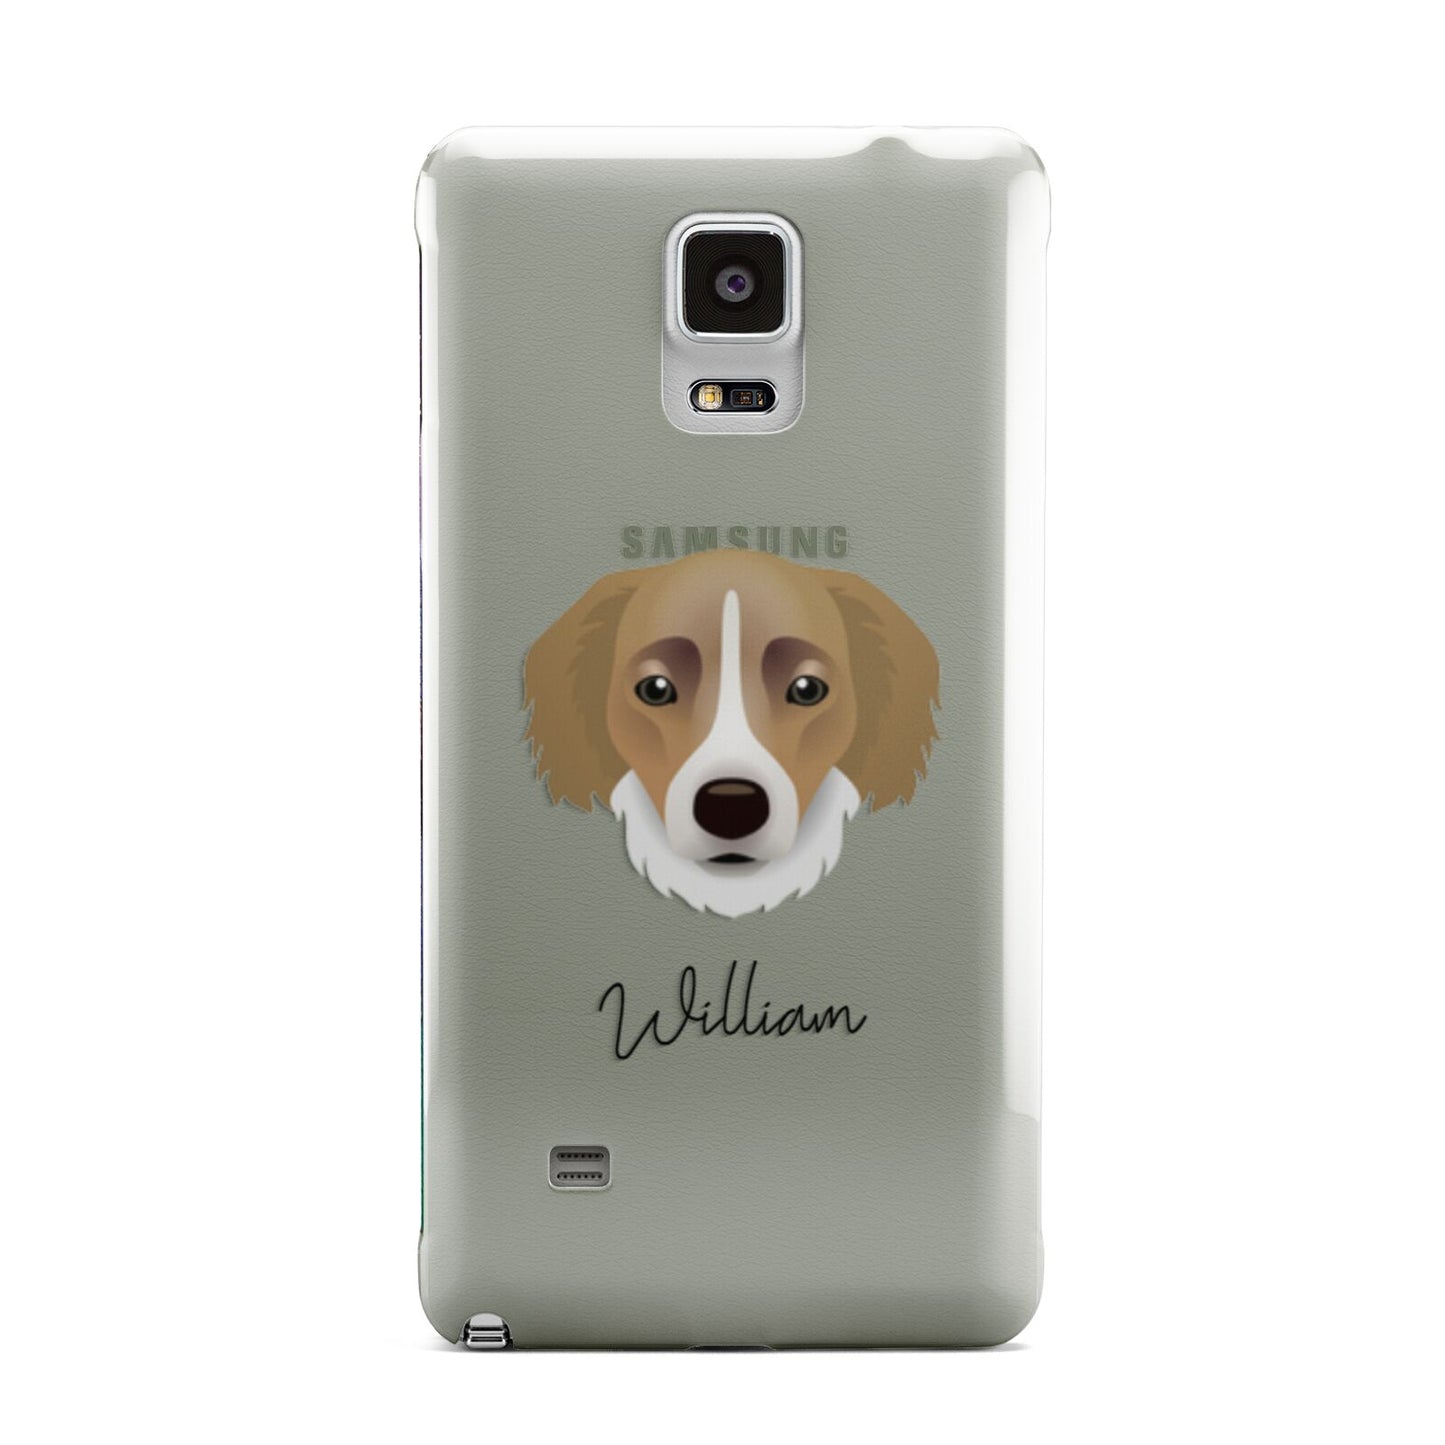 Siberian Cocker Personalised Samsung Galaxy Note 4 Case